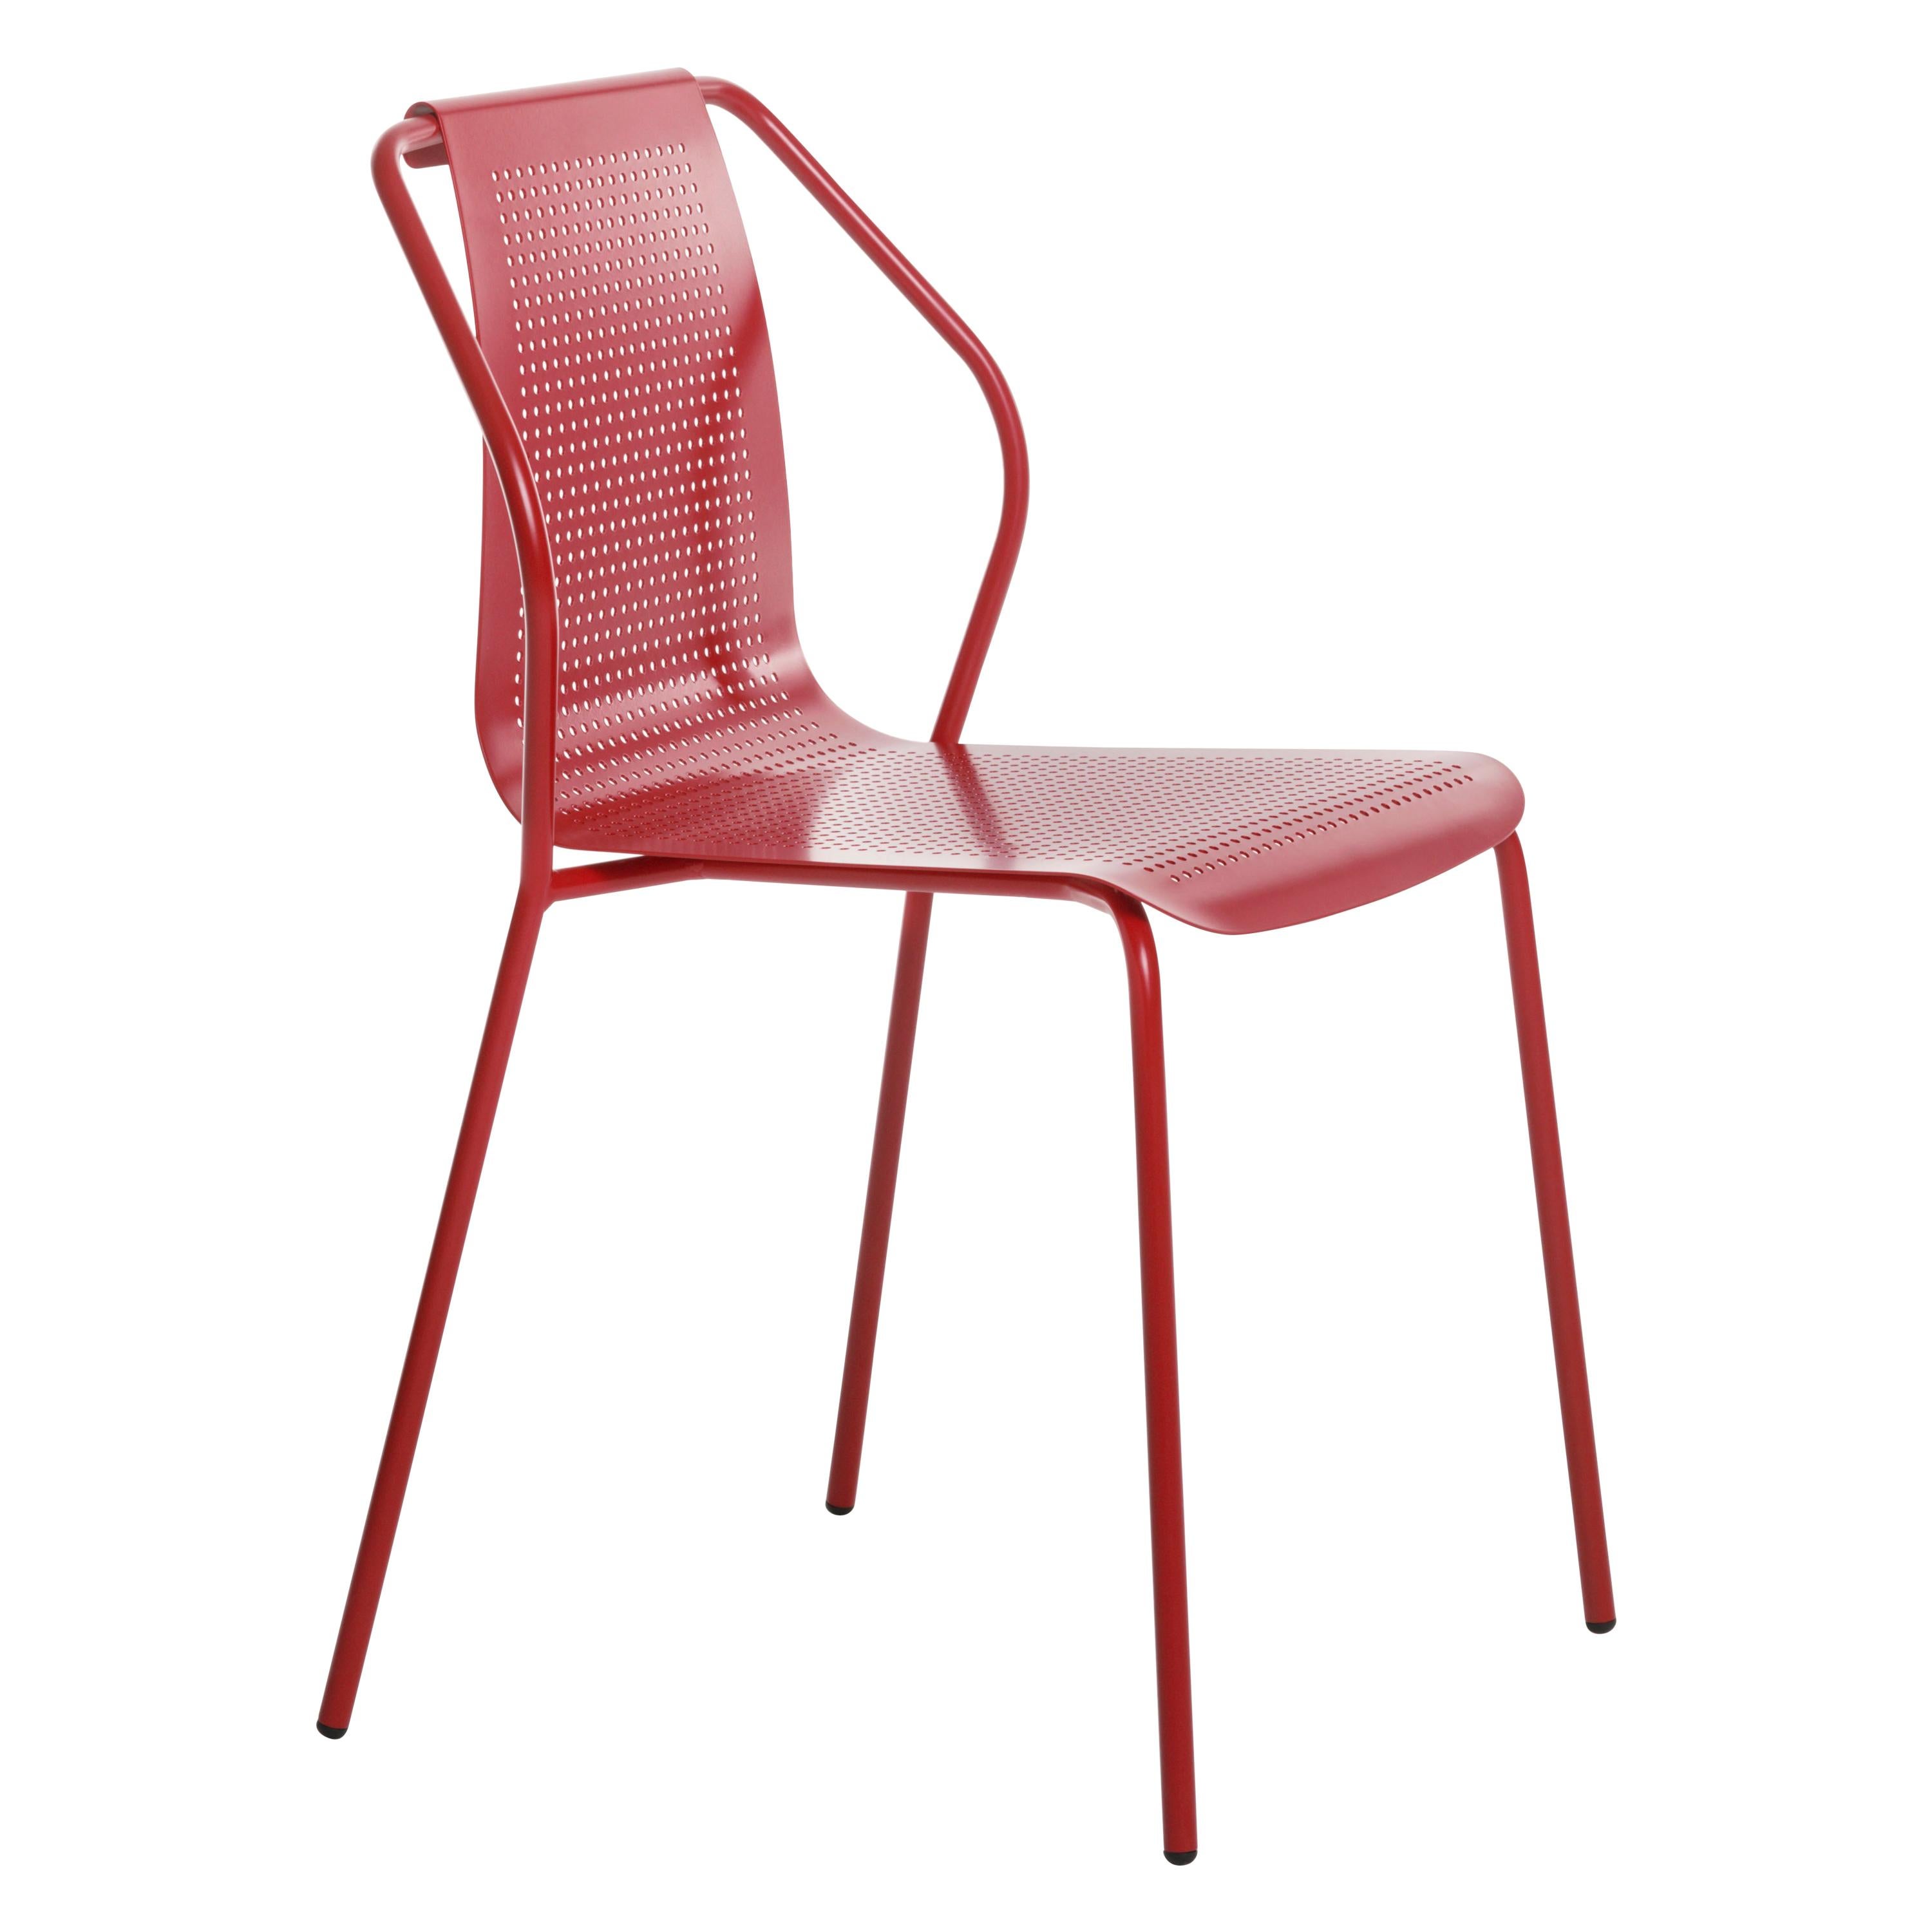 Baleri Italia Donna Outdoor Chair in Red Steel by Studio Irvine